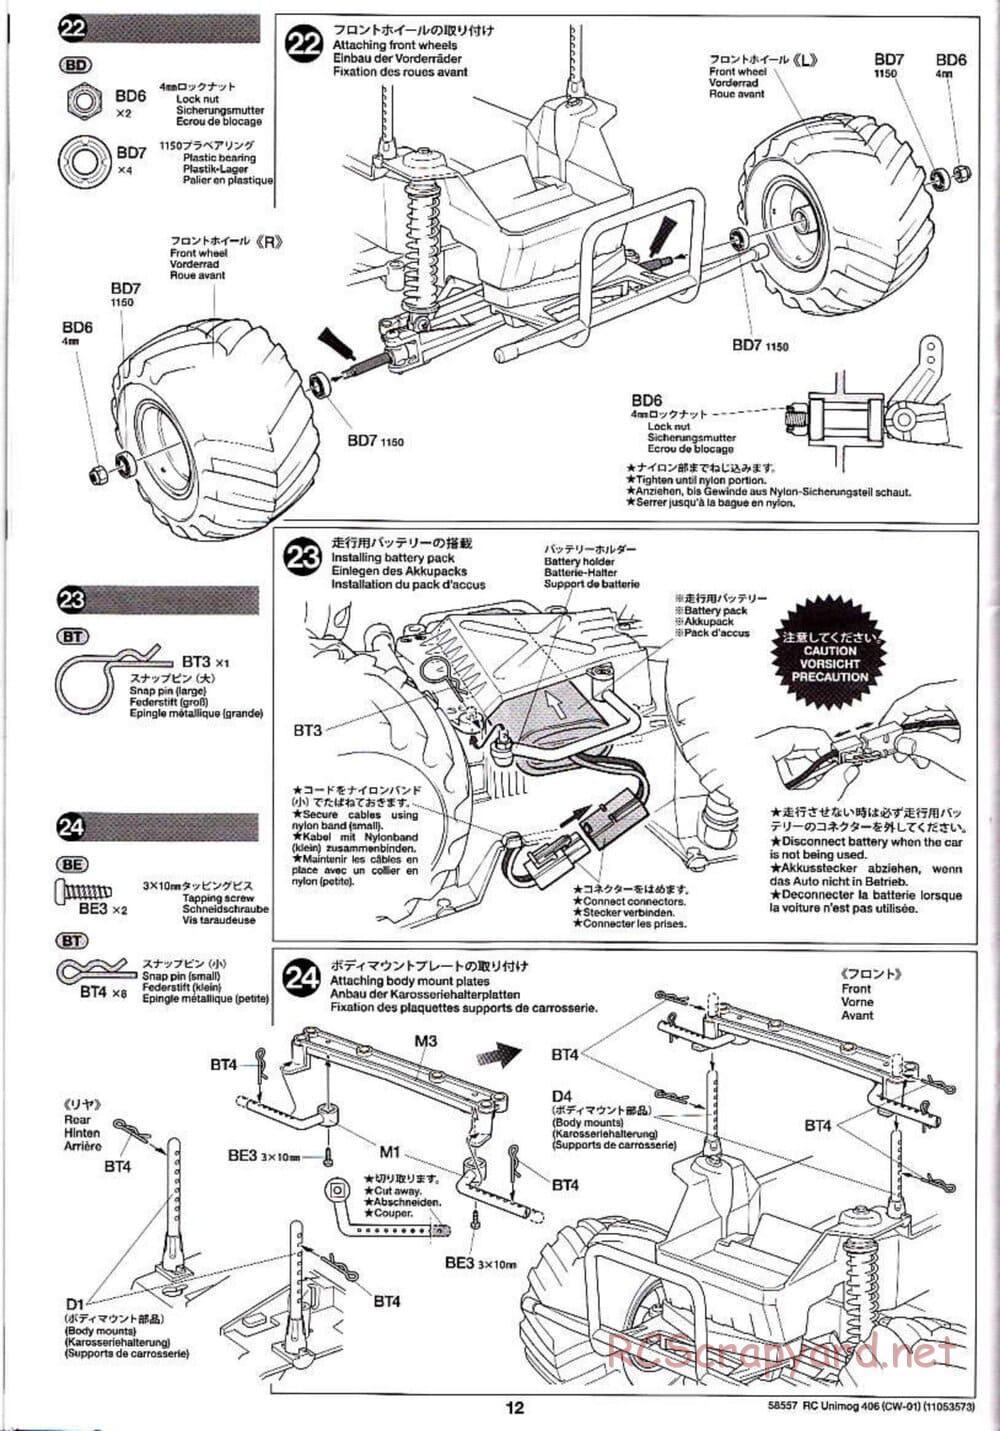 Tamiya - Mercedes-Benz Unimog 406 Series U900 - CW-01 Chassis - Manual - Page 12